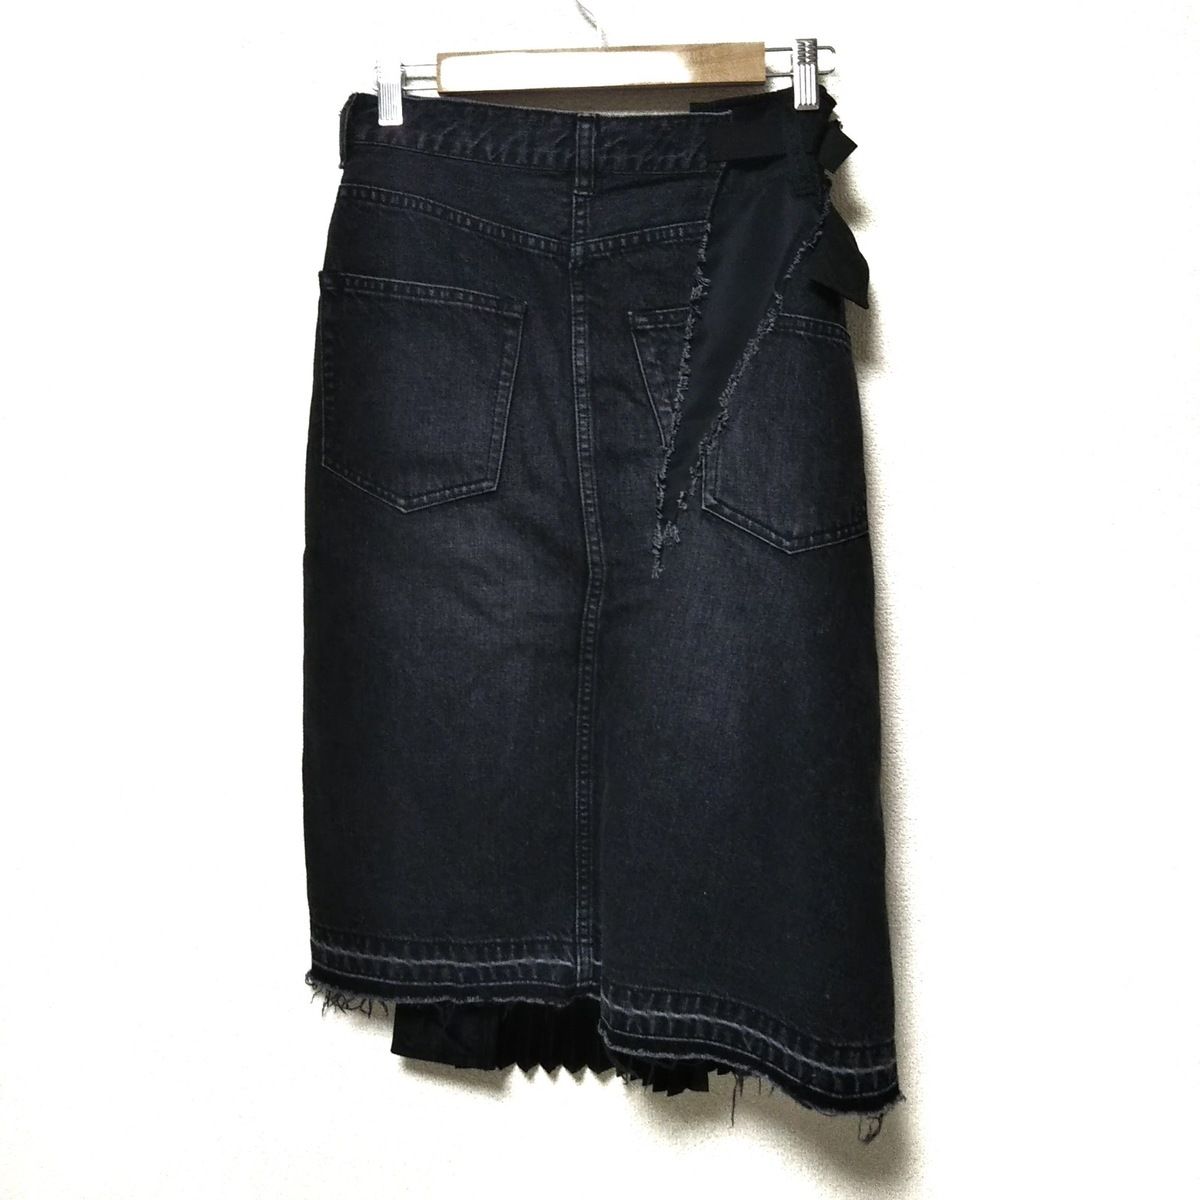 Sacai(サカイ) ロングスカート サイズ1 S レディース美品 - 19-04576 黒 デニム/巻きスカート風/プリーツ - メルカリ